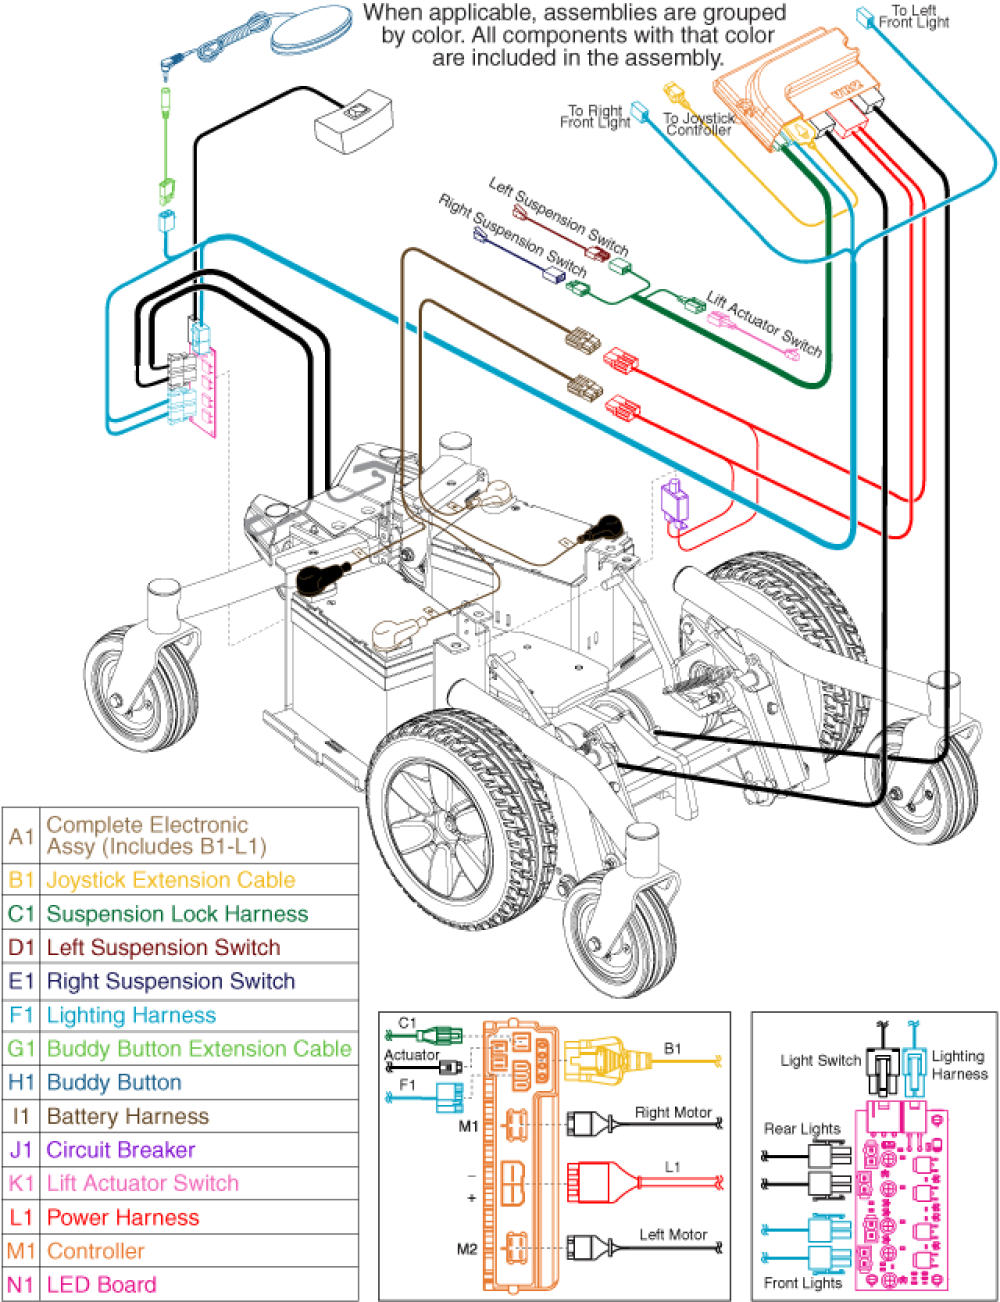 Electronics - Jazzy Air parts diagram